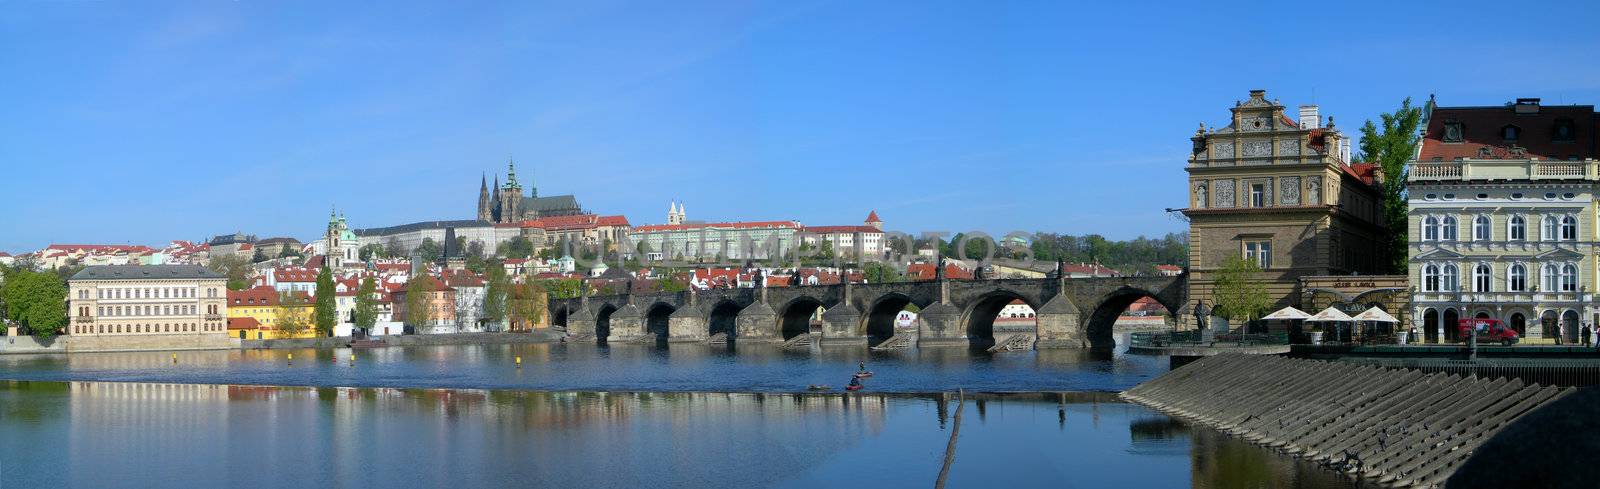 Prague castle and Charles bridge across Vltava river